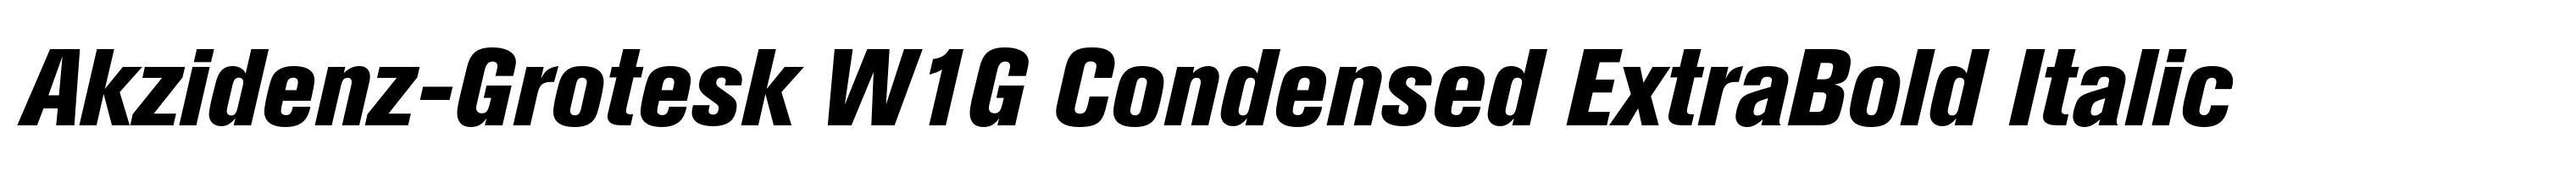 Akzidenz-Grotesk W1G Condensed ExtraBold Italic